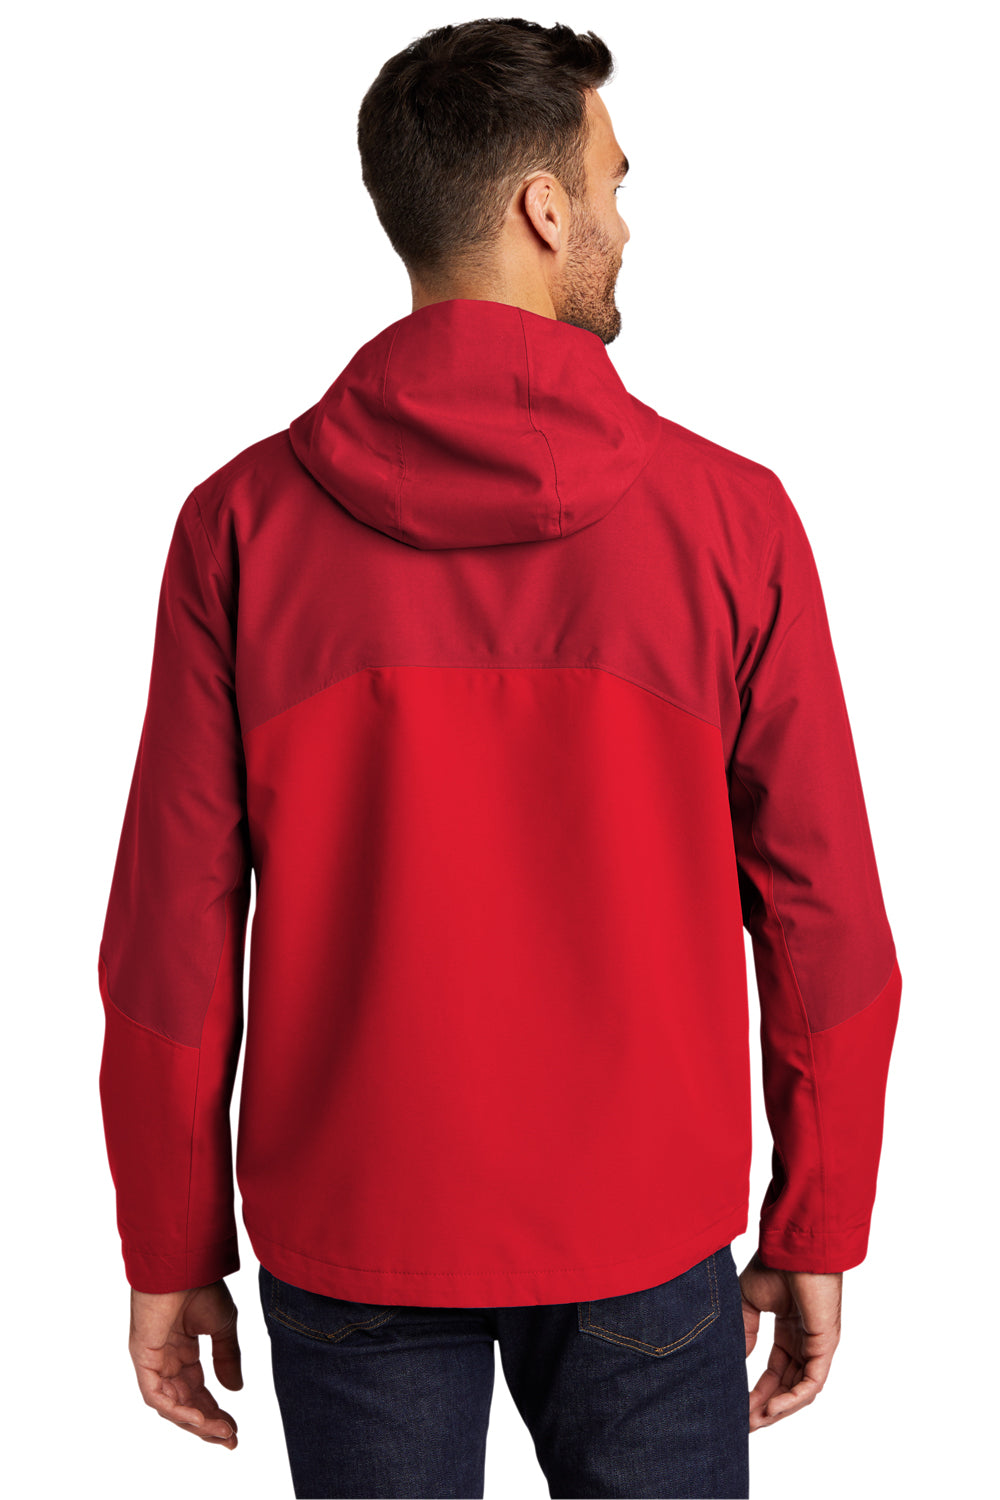 Port Authority Mens Tech Full Zip Hooded Rain Jacket Sangria Red/True Red Side